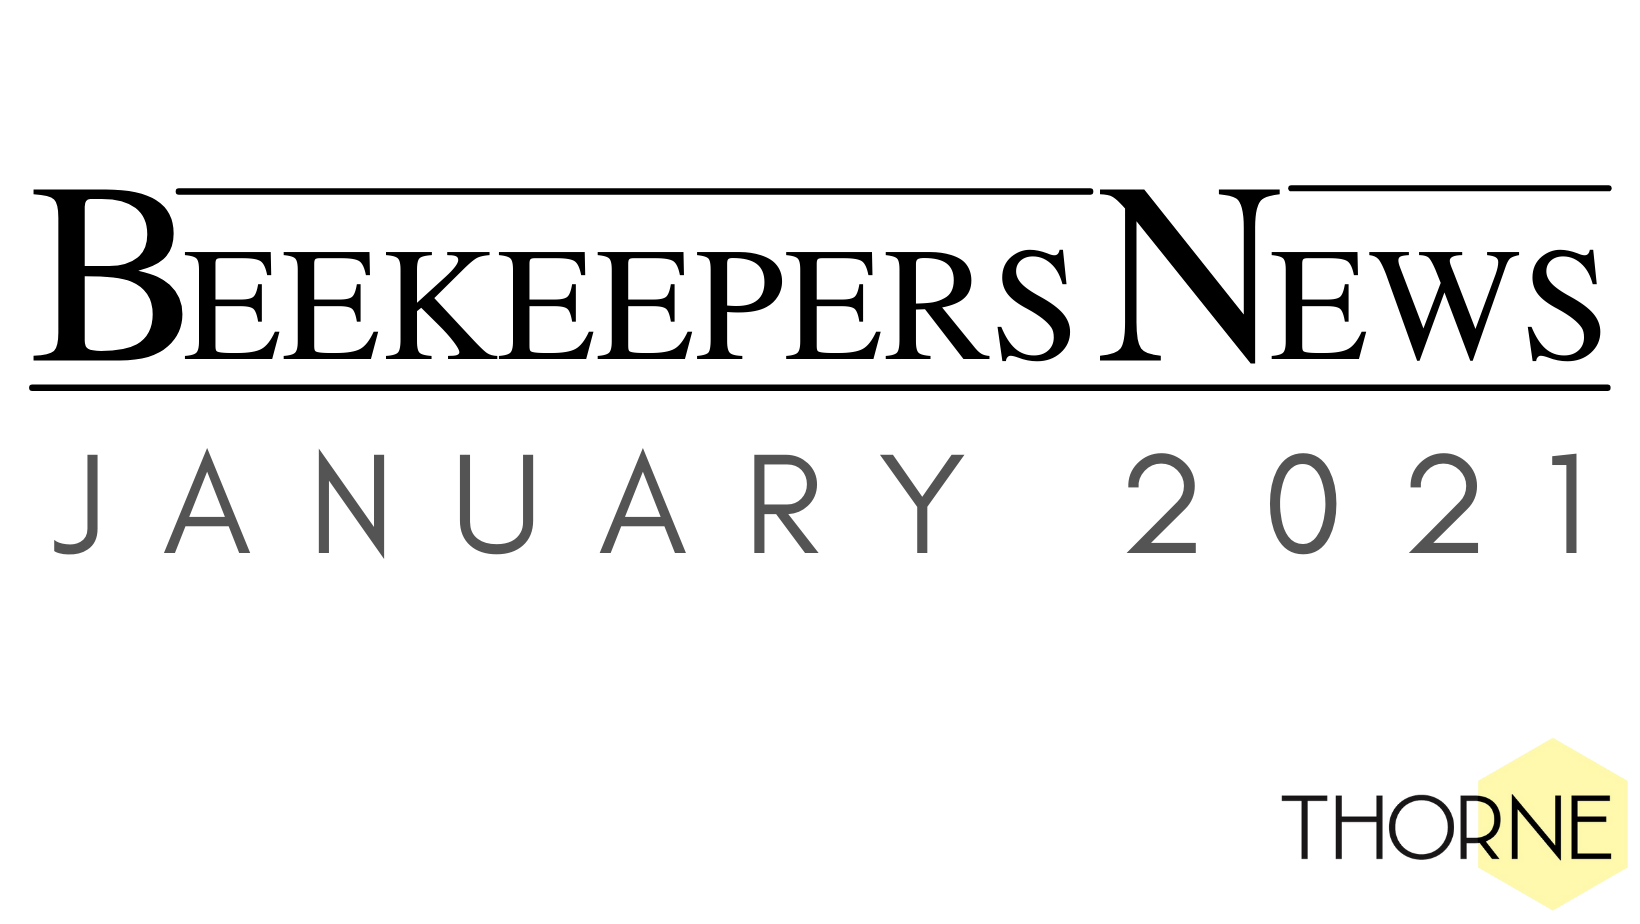 Beekeepers News - January 2021 - Issue 52